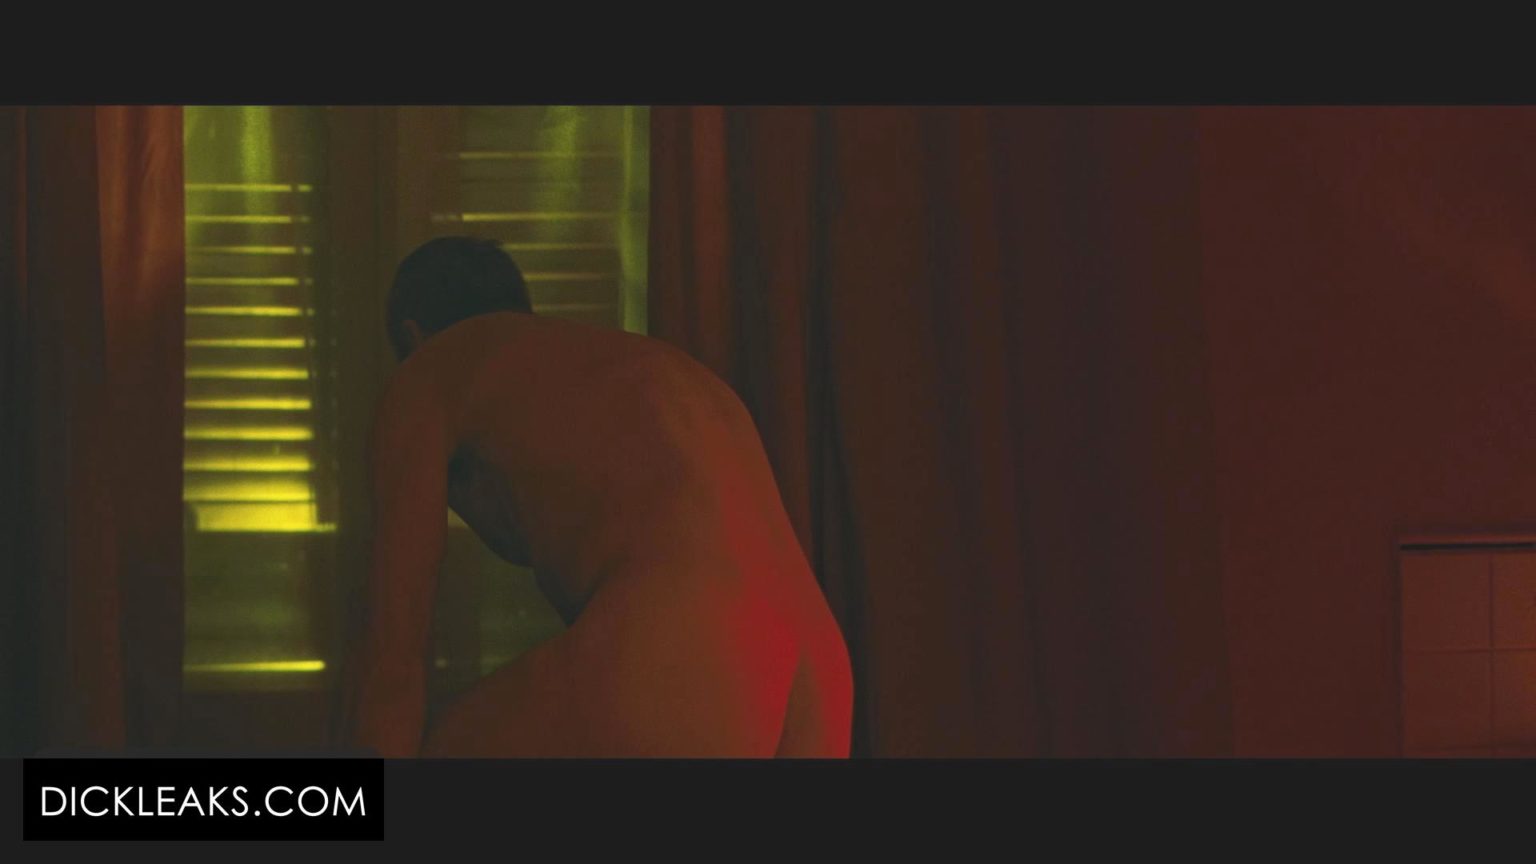 Pop George Clooney Nude Pics Naughty Sex Scene Leaked Men